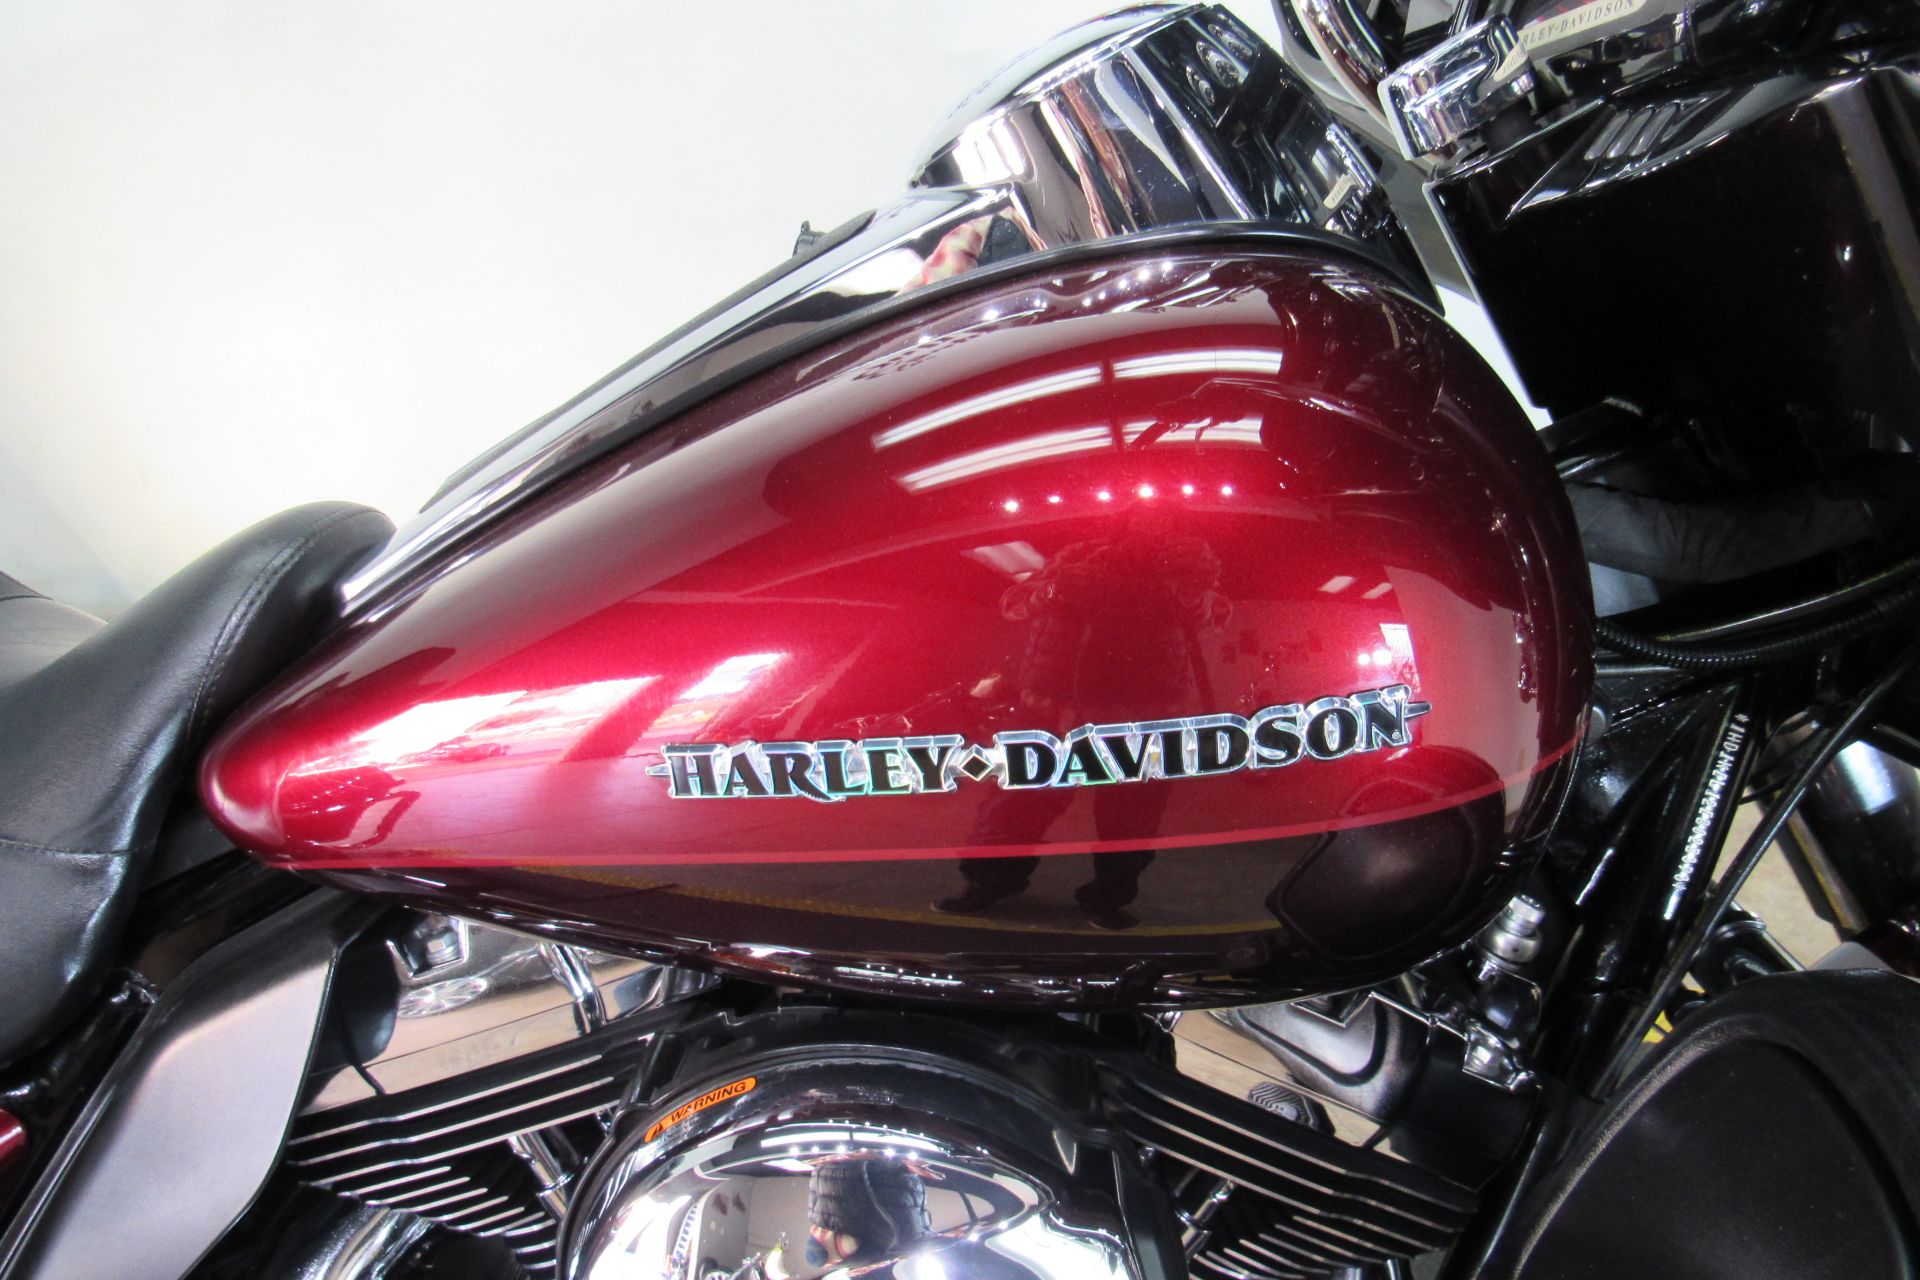 2014 Harley-Davidson Ultra Limited in Temecula, California - Photo 7